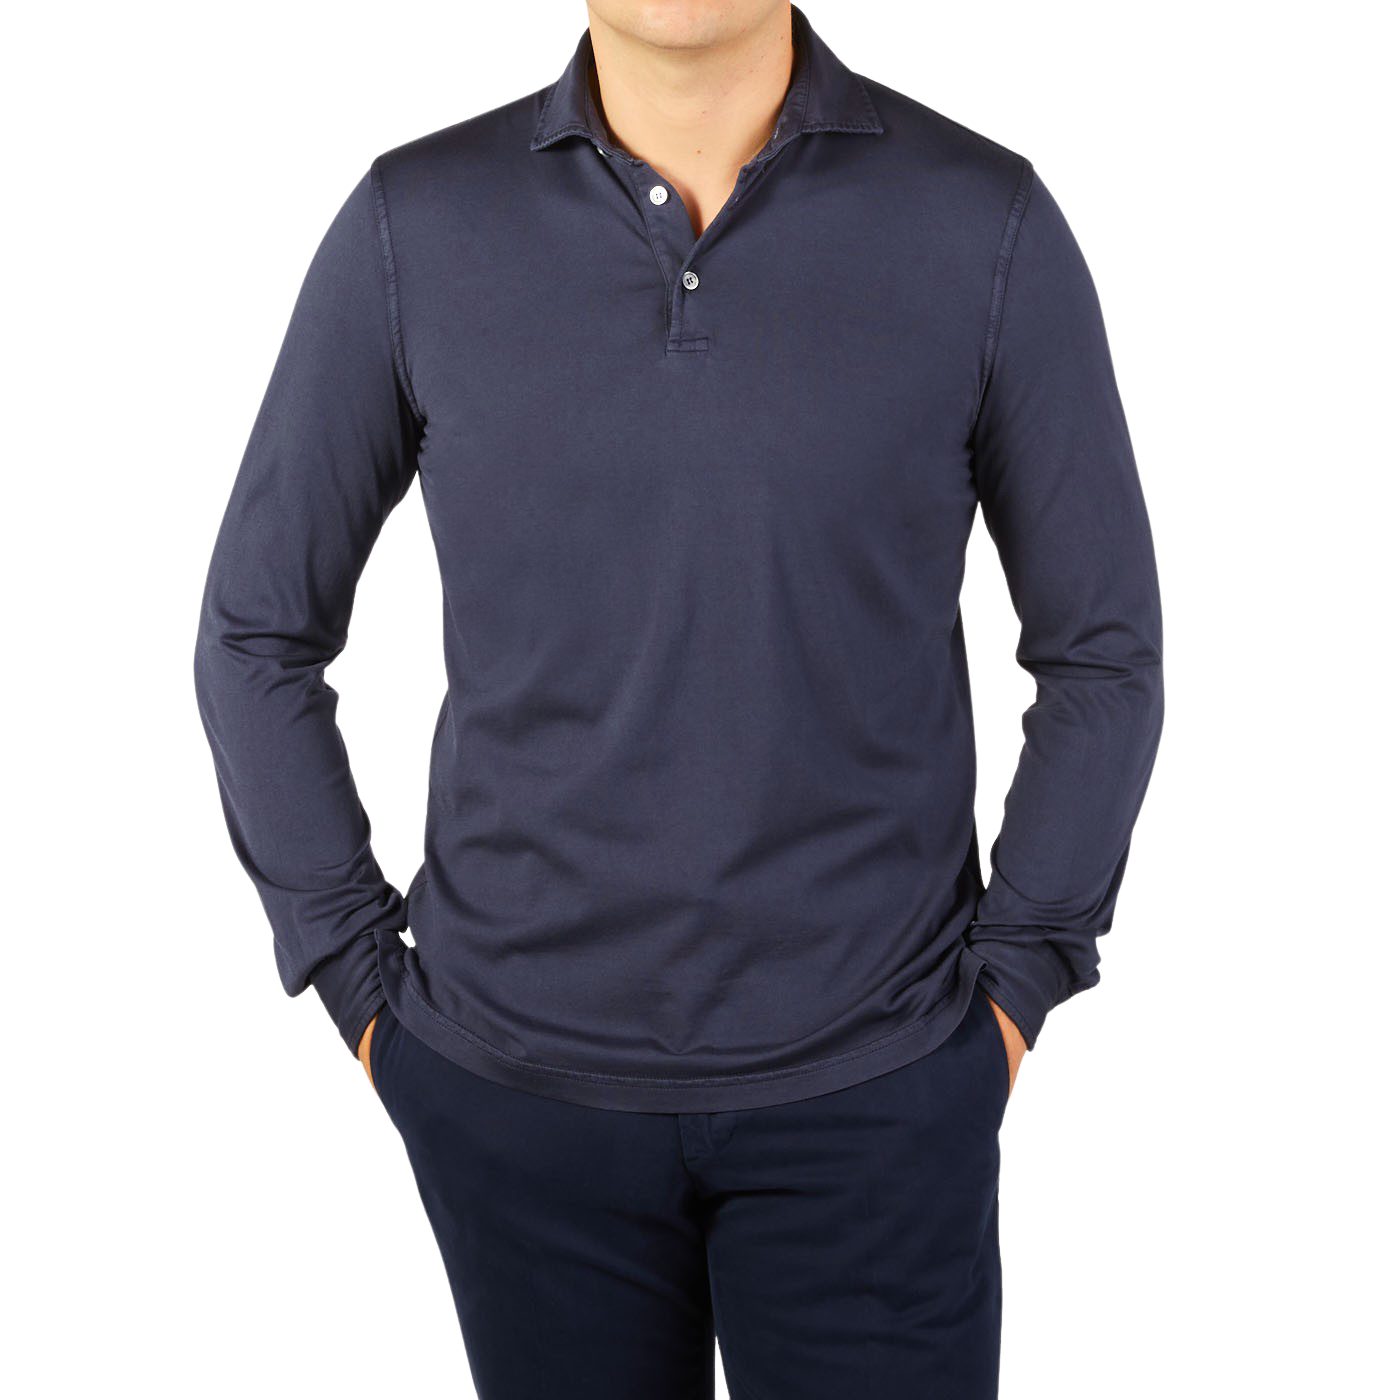 A man wearing a Navy Blue Organic Cotton LS polo shirt by Fedeli.